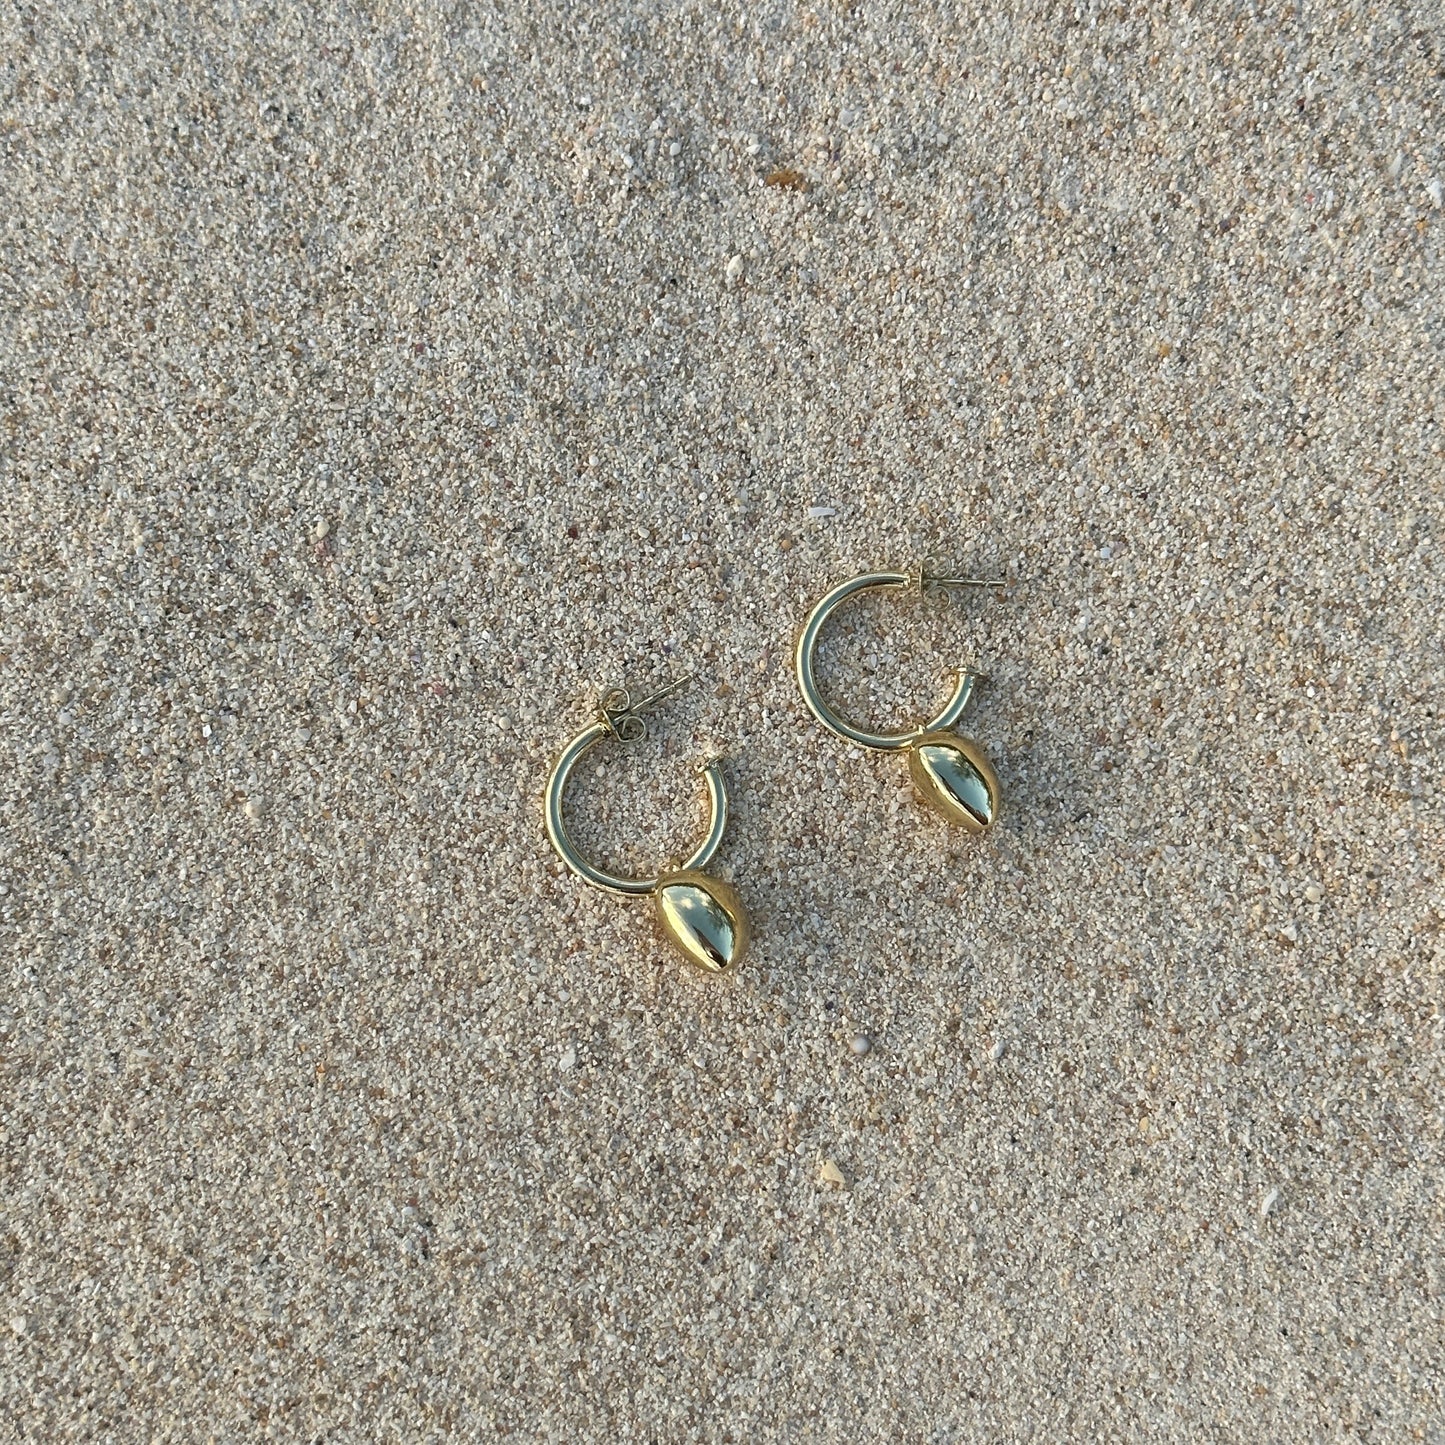 Juniper Earrings - Gold